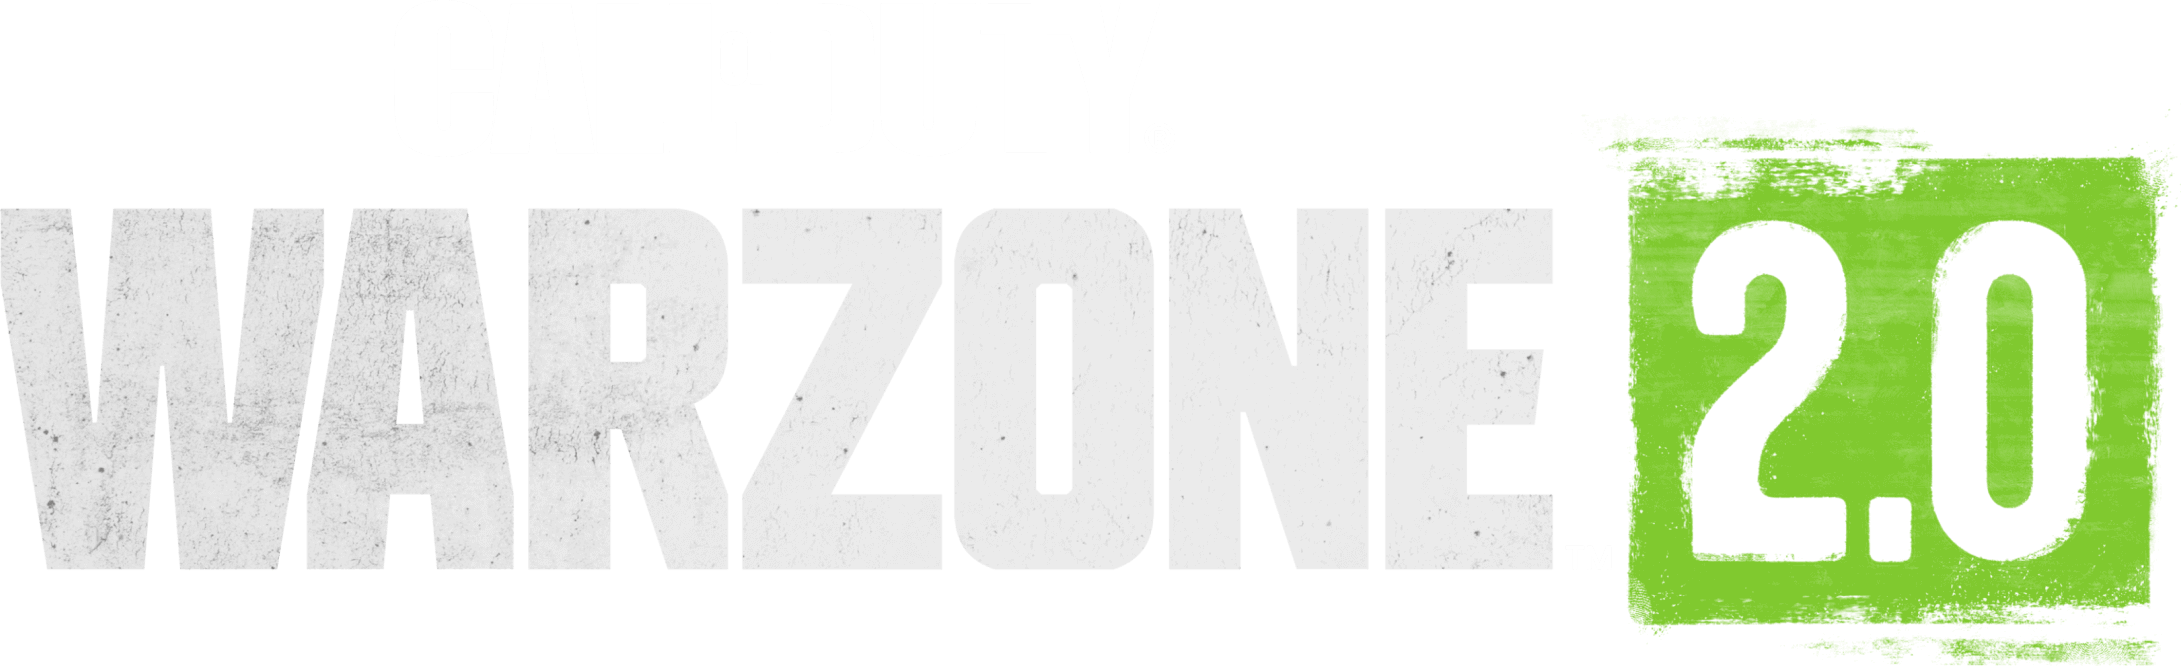 Call of Duty Logo - PNGBUY